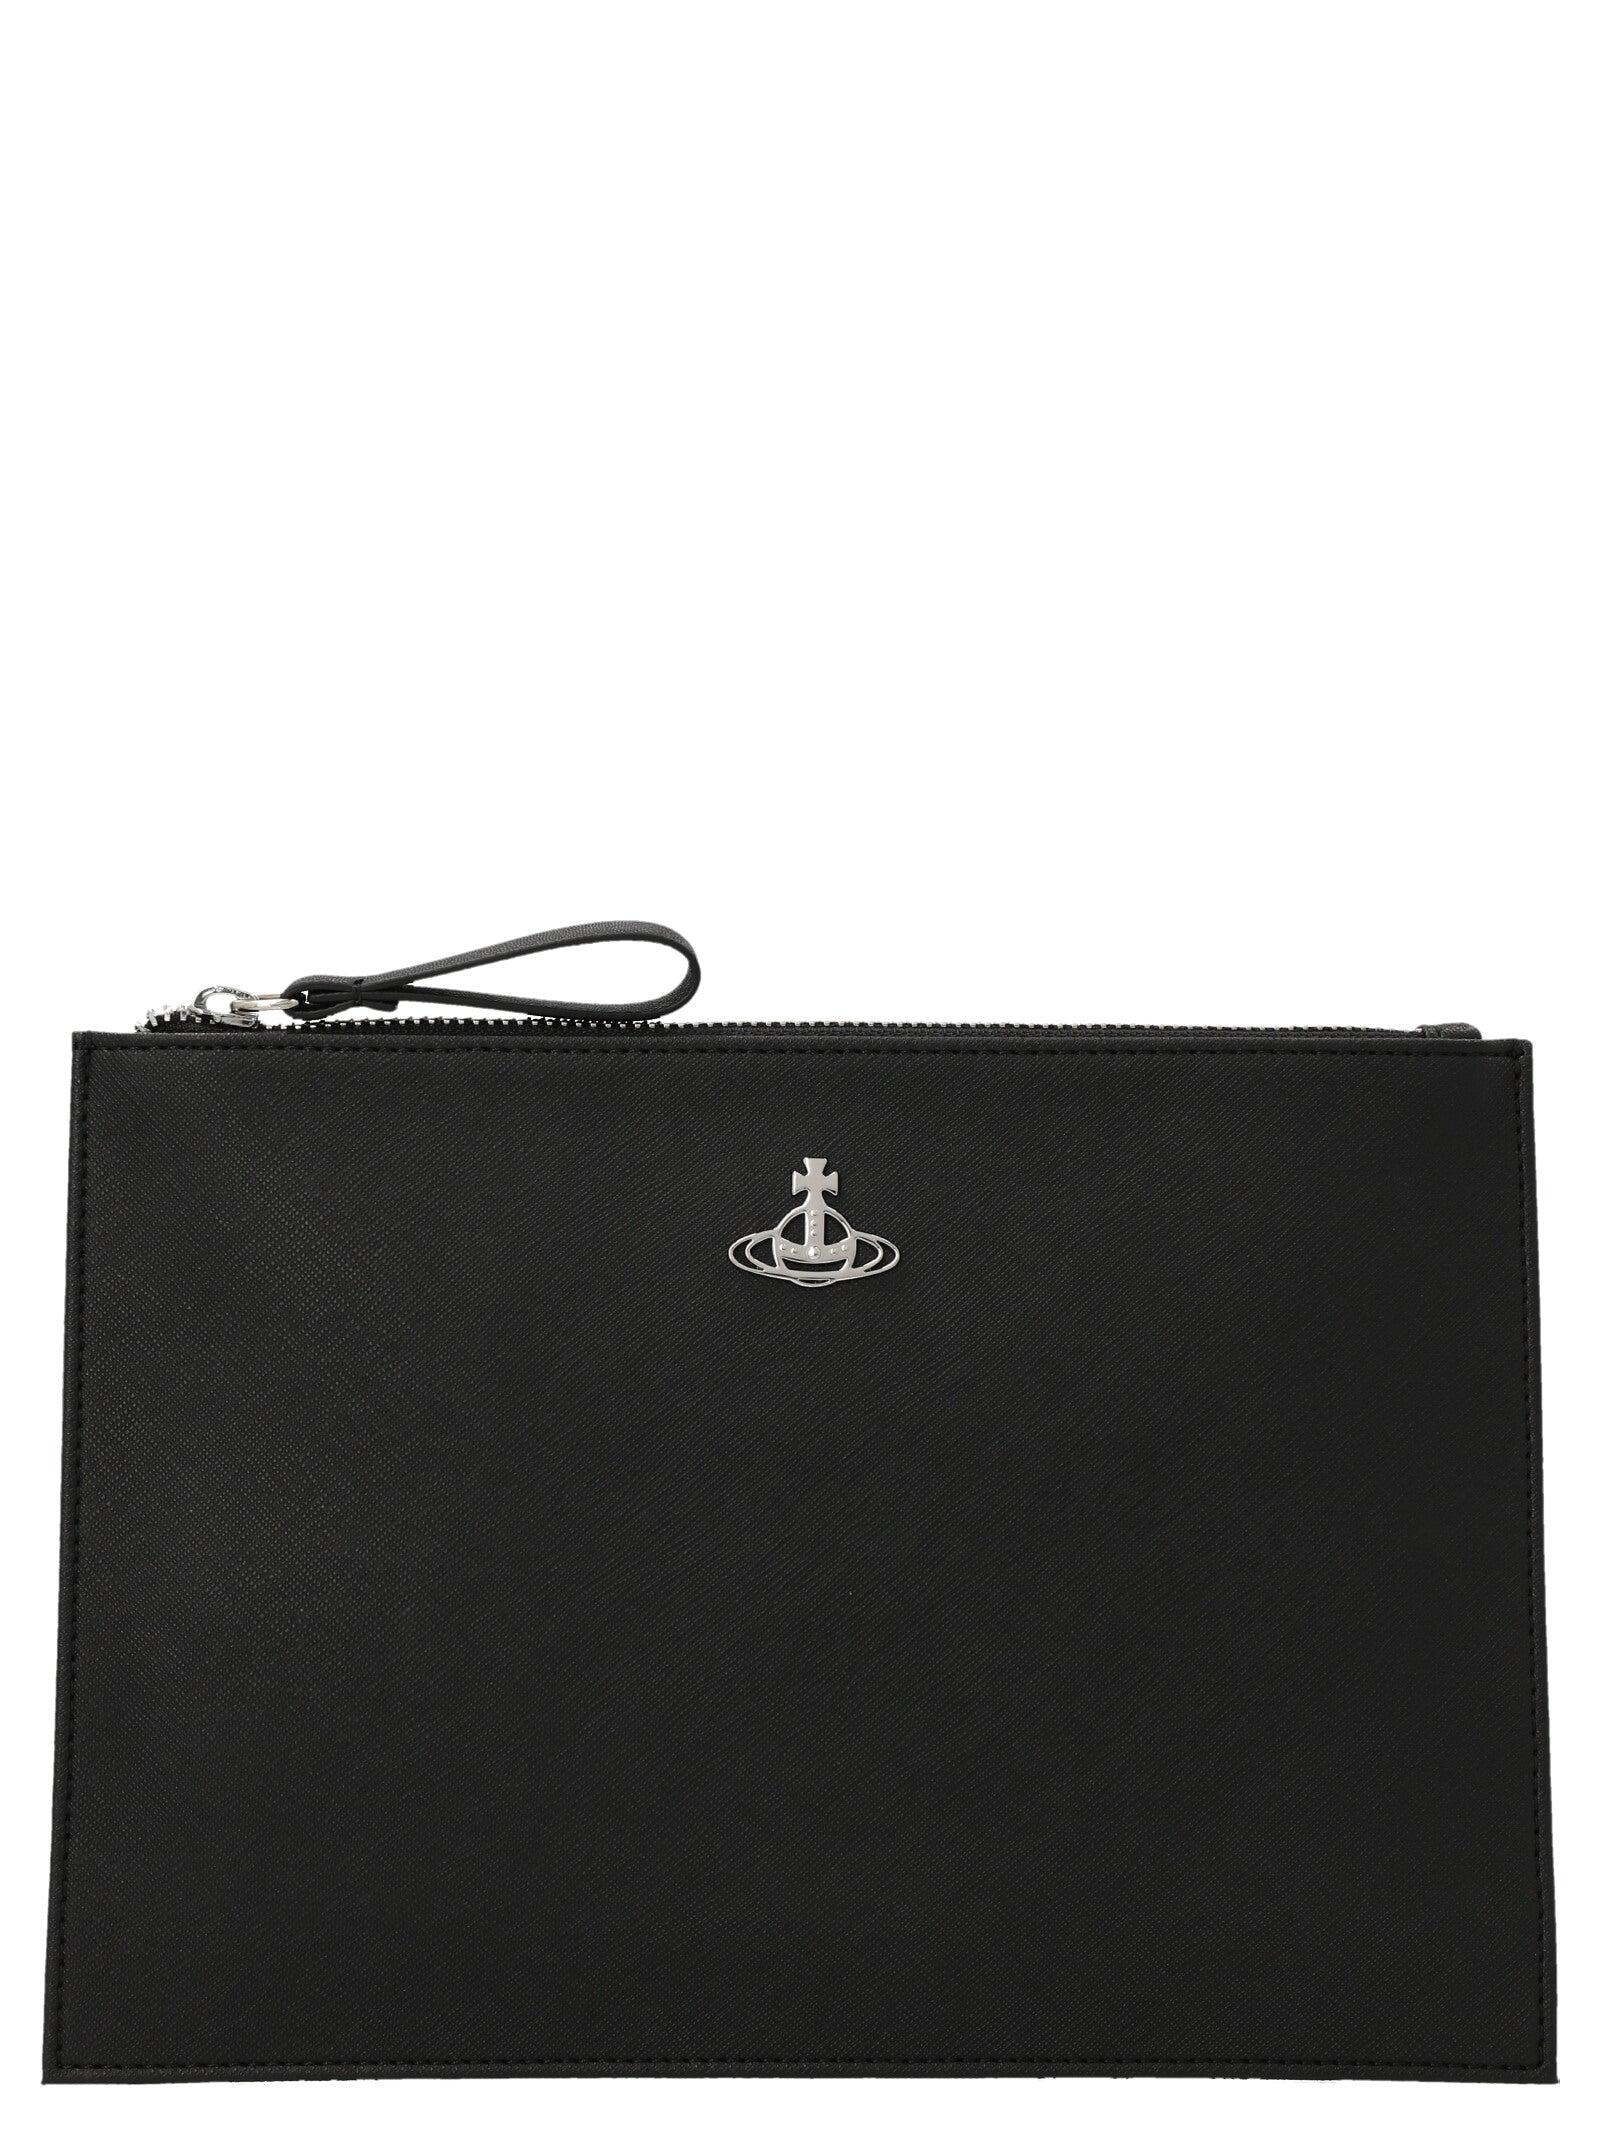 Vivienne Westwood Biogreen Printed Saffiano Leather Handbag